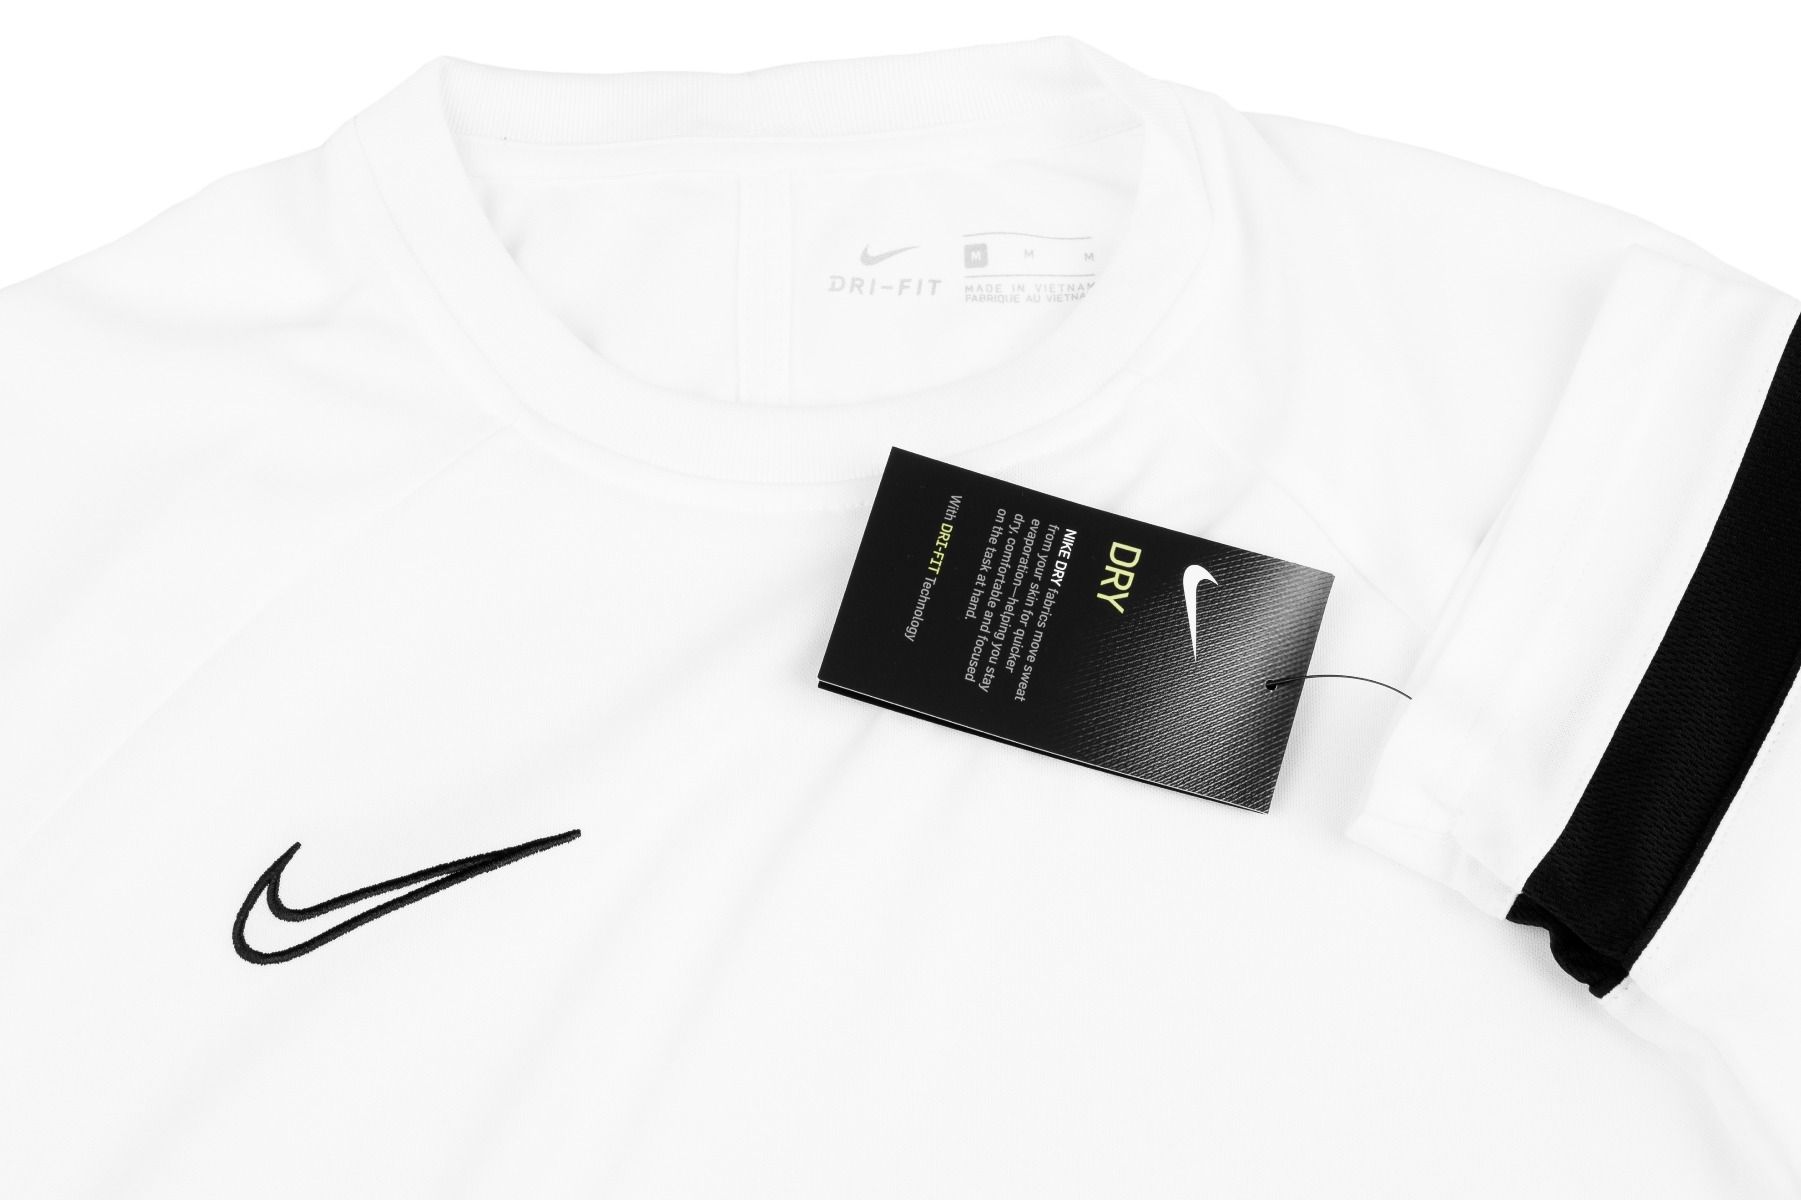 Nike T-Shirt Herren Dri-FIT Academy CW6101 100